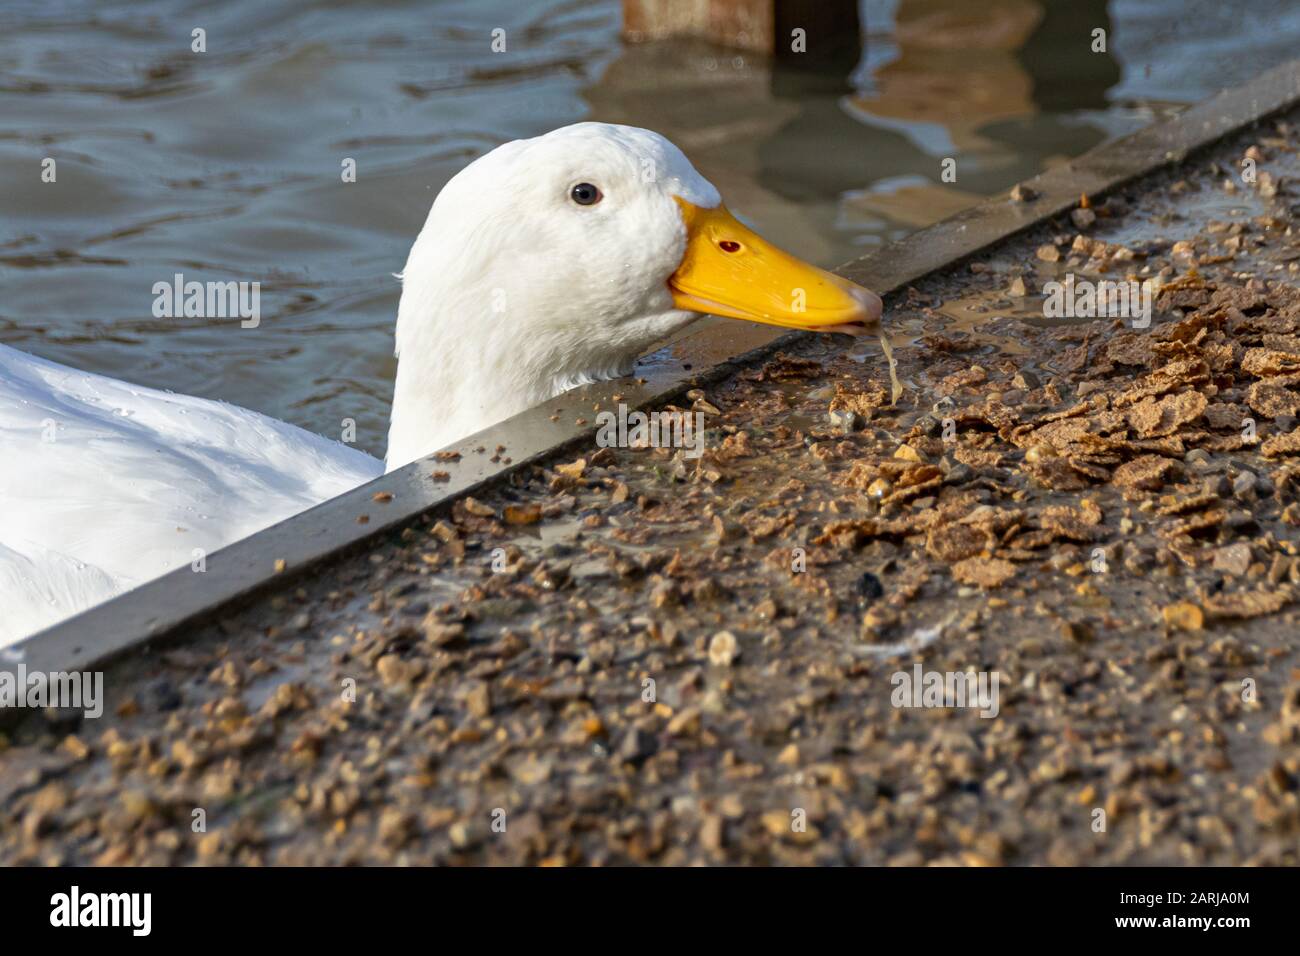 White pekin ducks dribbling pond water onto cereal food Stock Photo